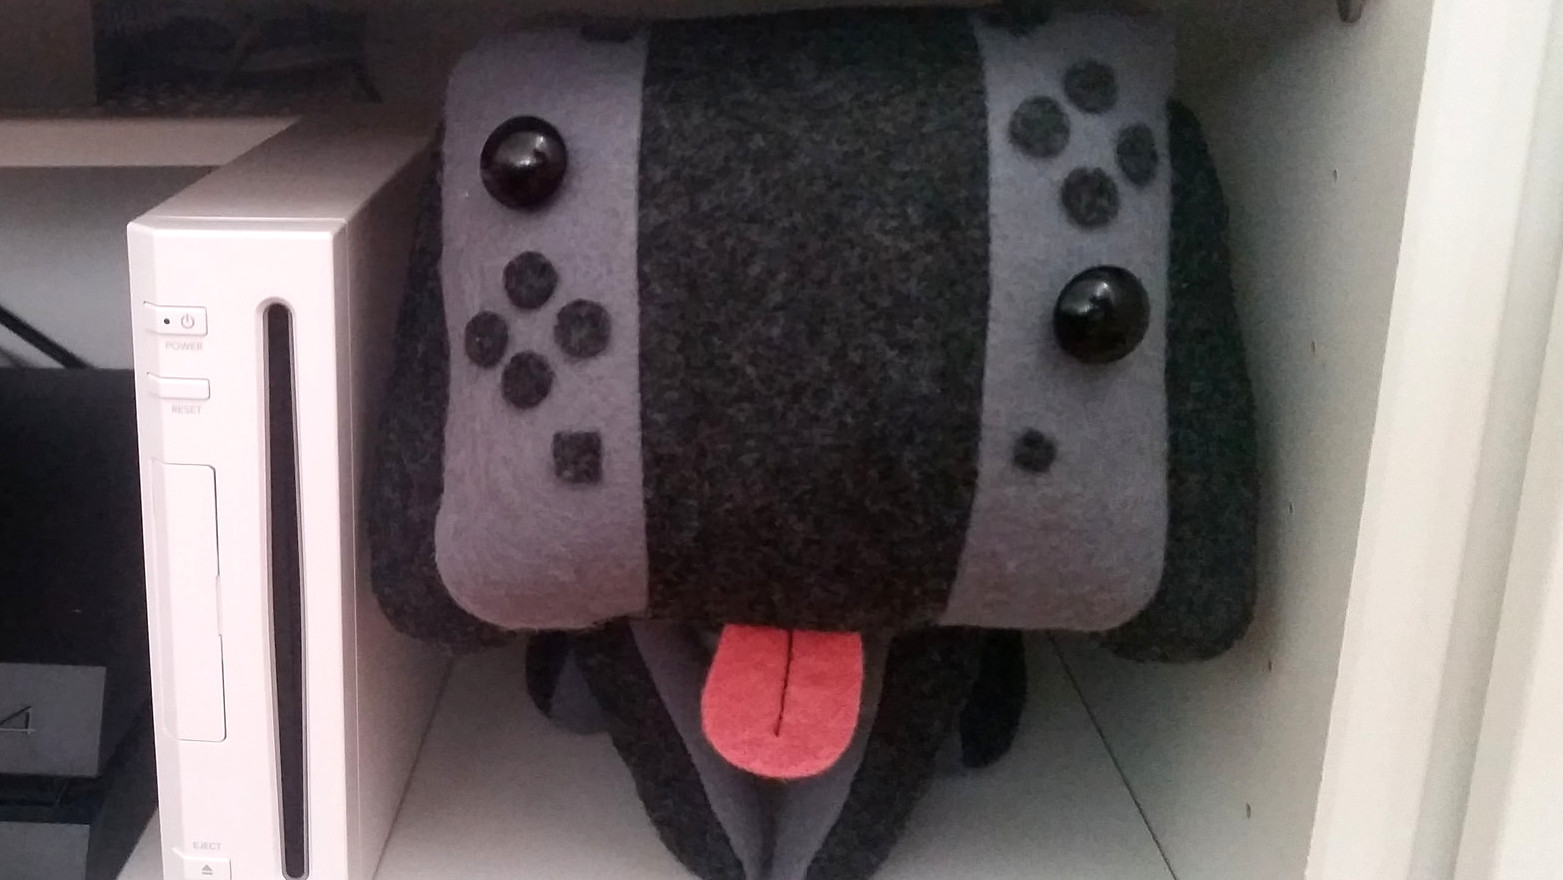 Nintendo Switch Controller Dog